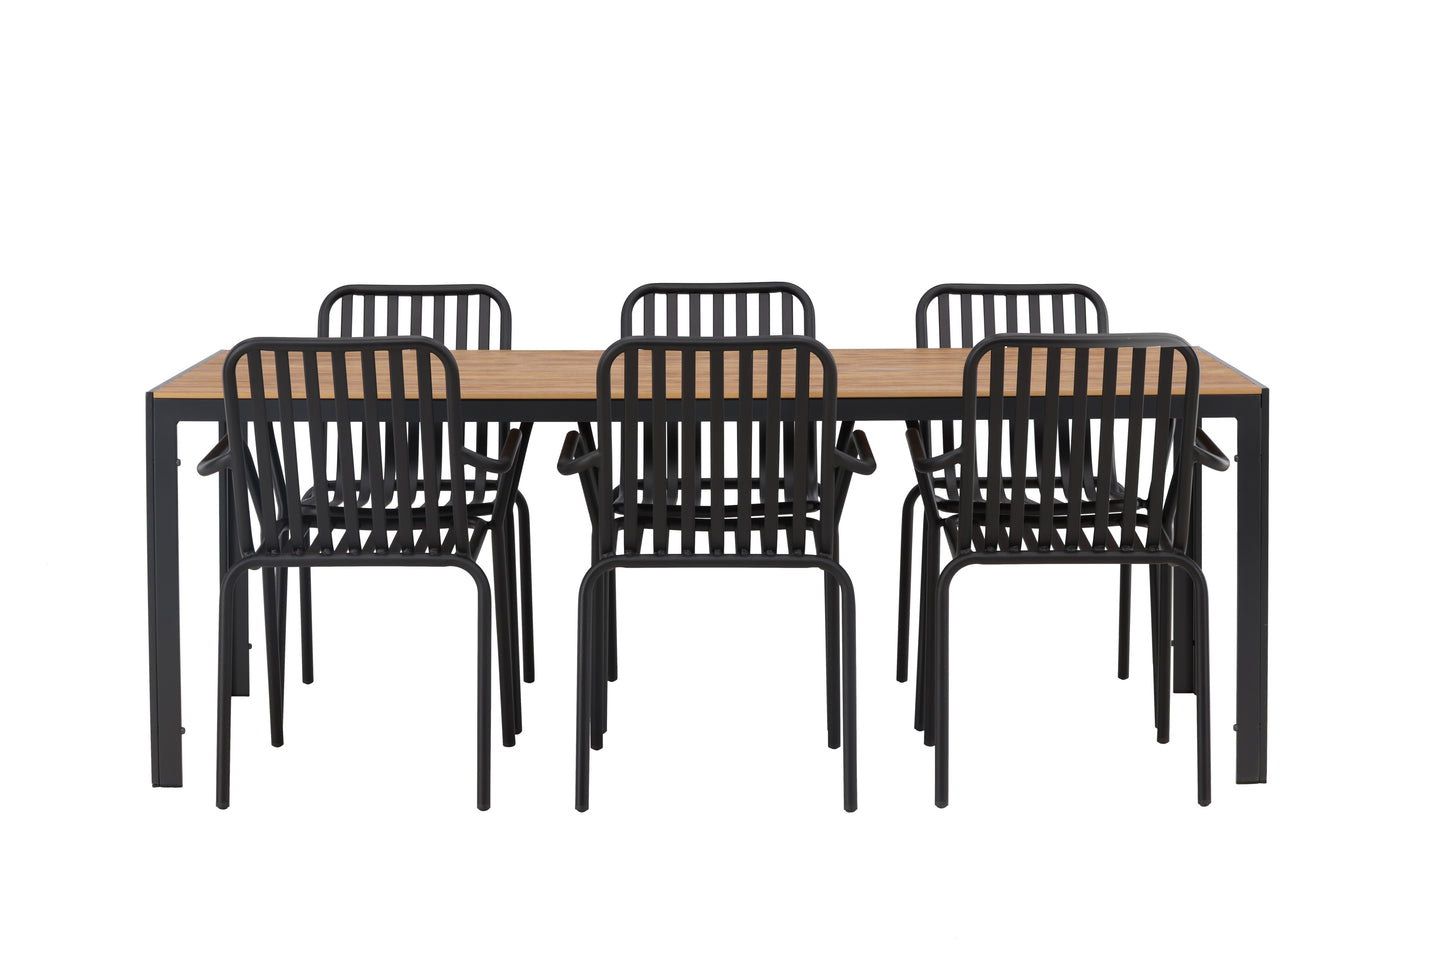 Break - Spisebord, Aluminium - Sort / Natur Rektangulær 90*200* + Pekig stol Aluminium - Sort